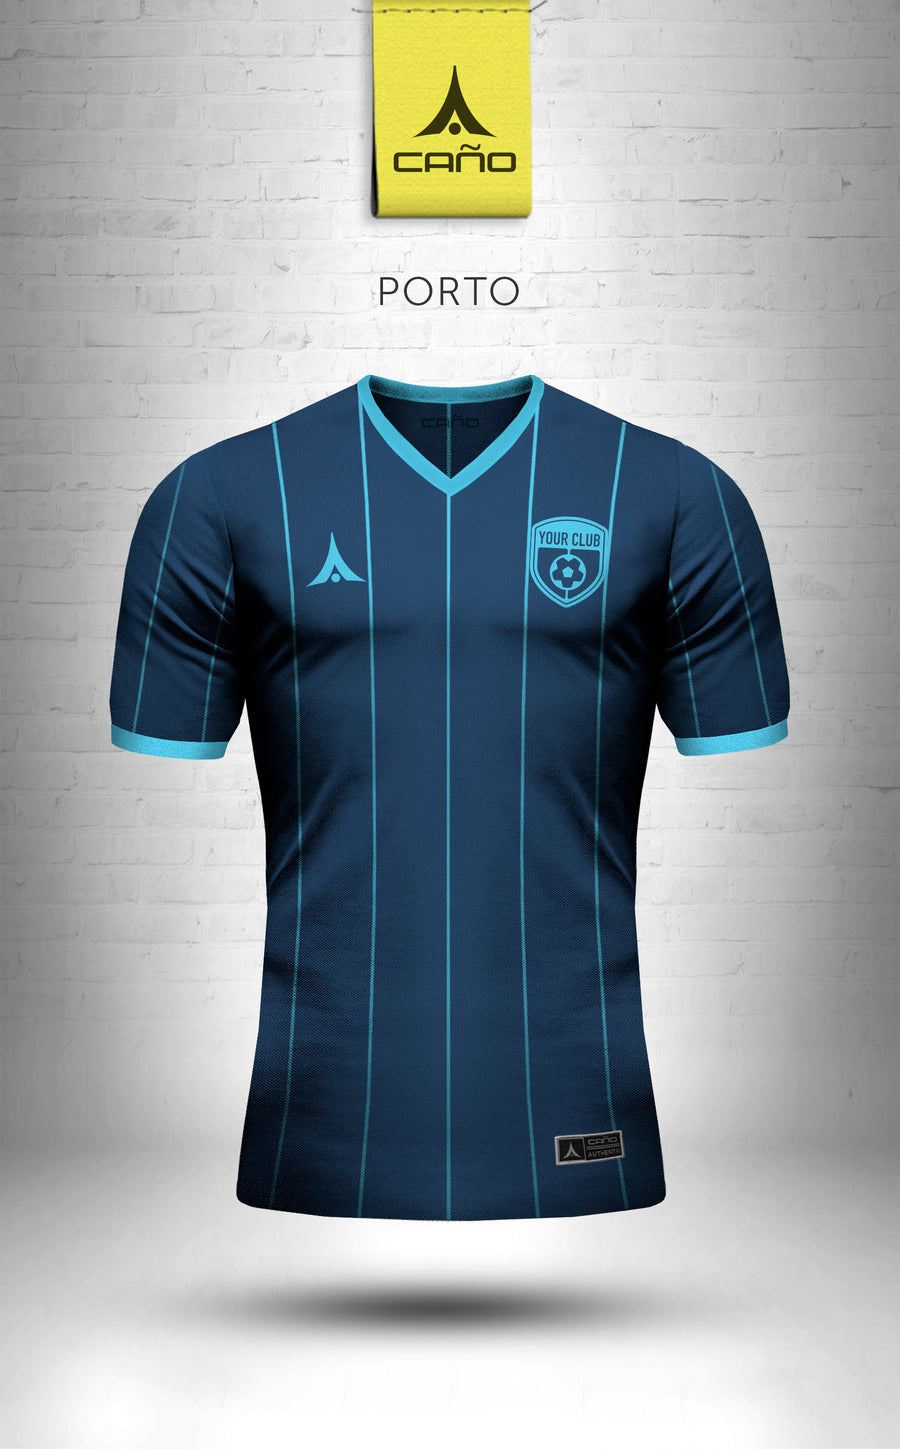 Porto in navy/light blue